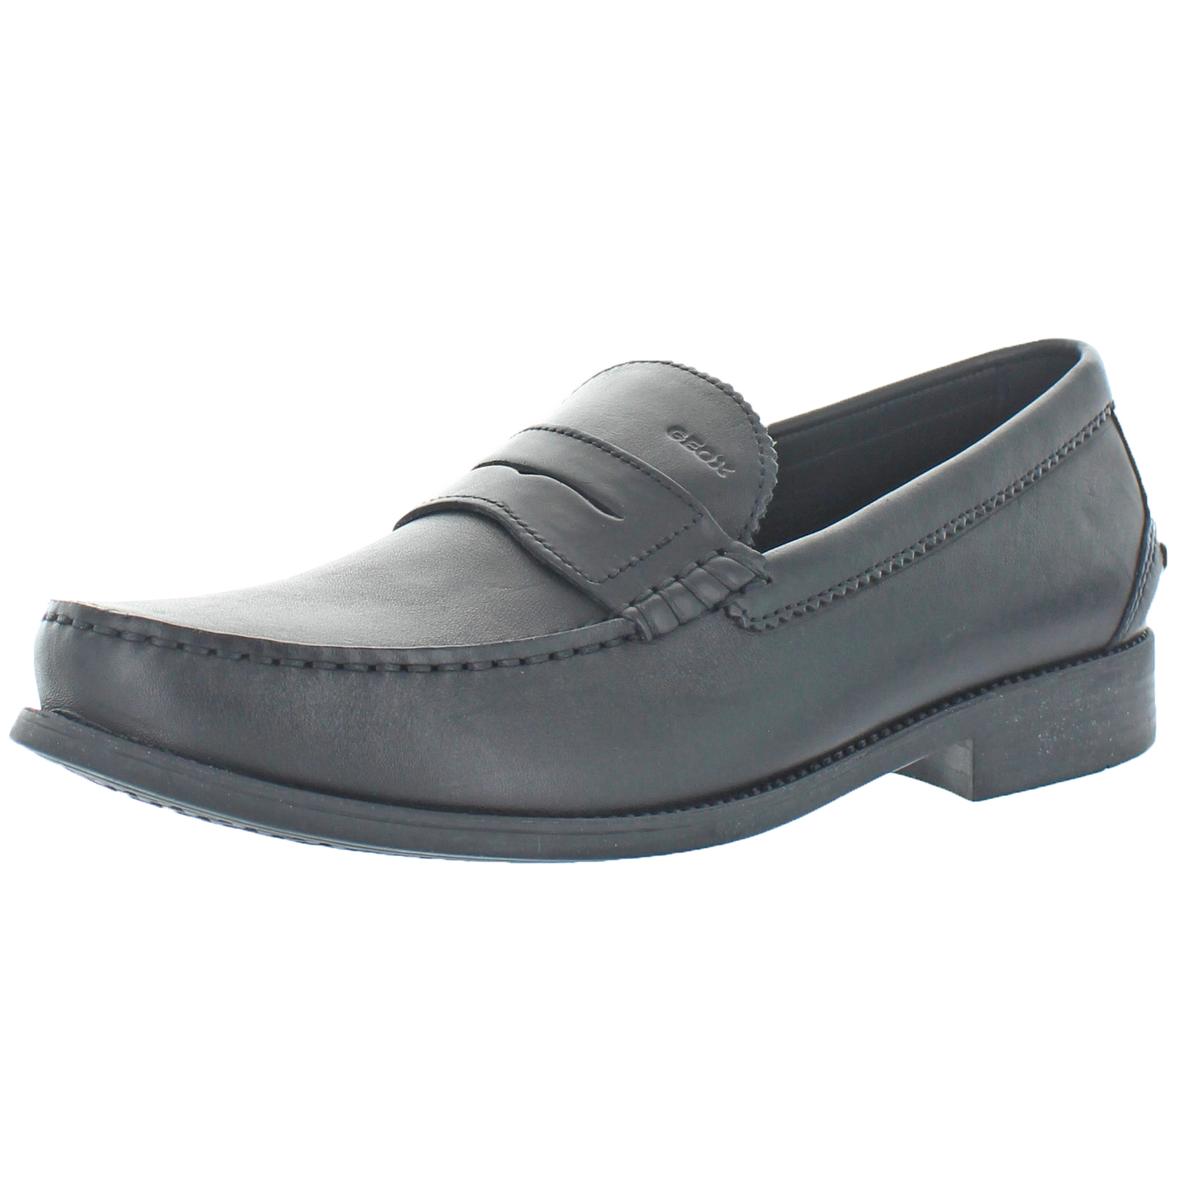 Geox Respira Mens Damon Black Leather Moccasins Shoes 12.5 Medium (D ...